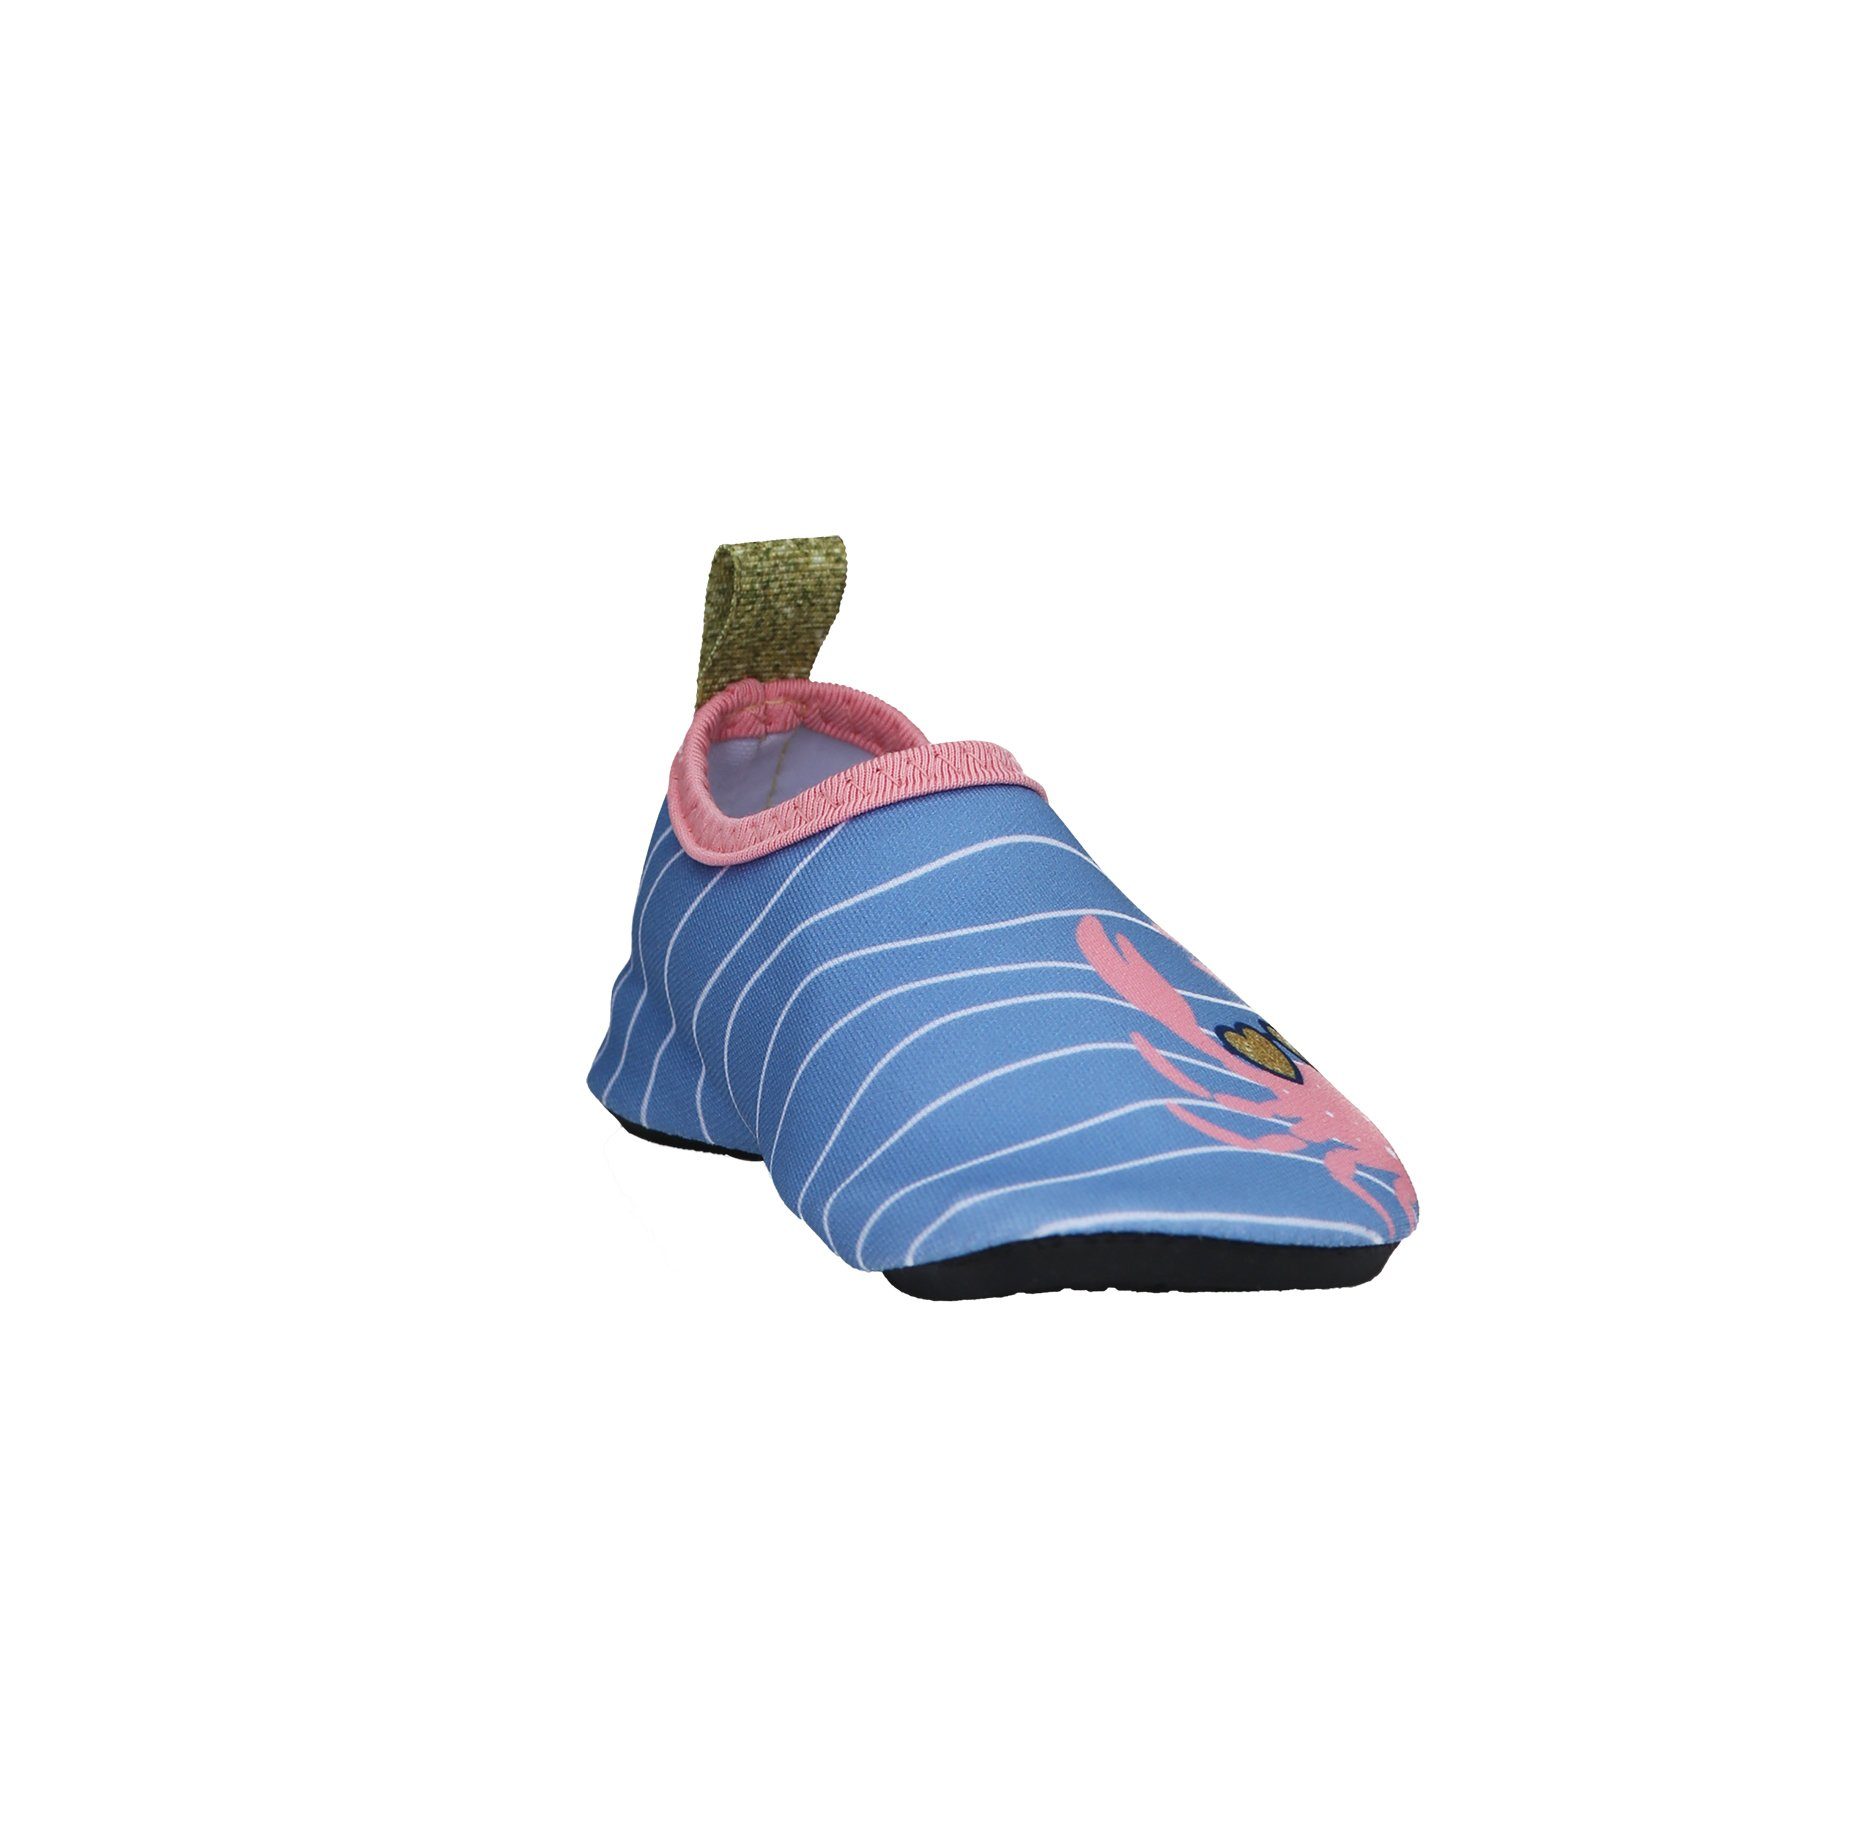 Krebs Badeschuh Barfuß-Schuh Playshoes